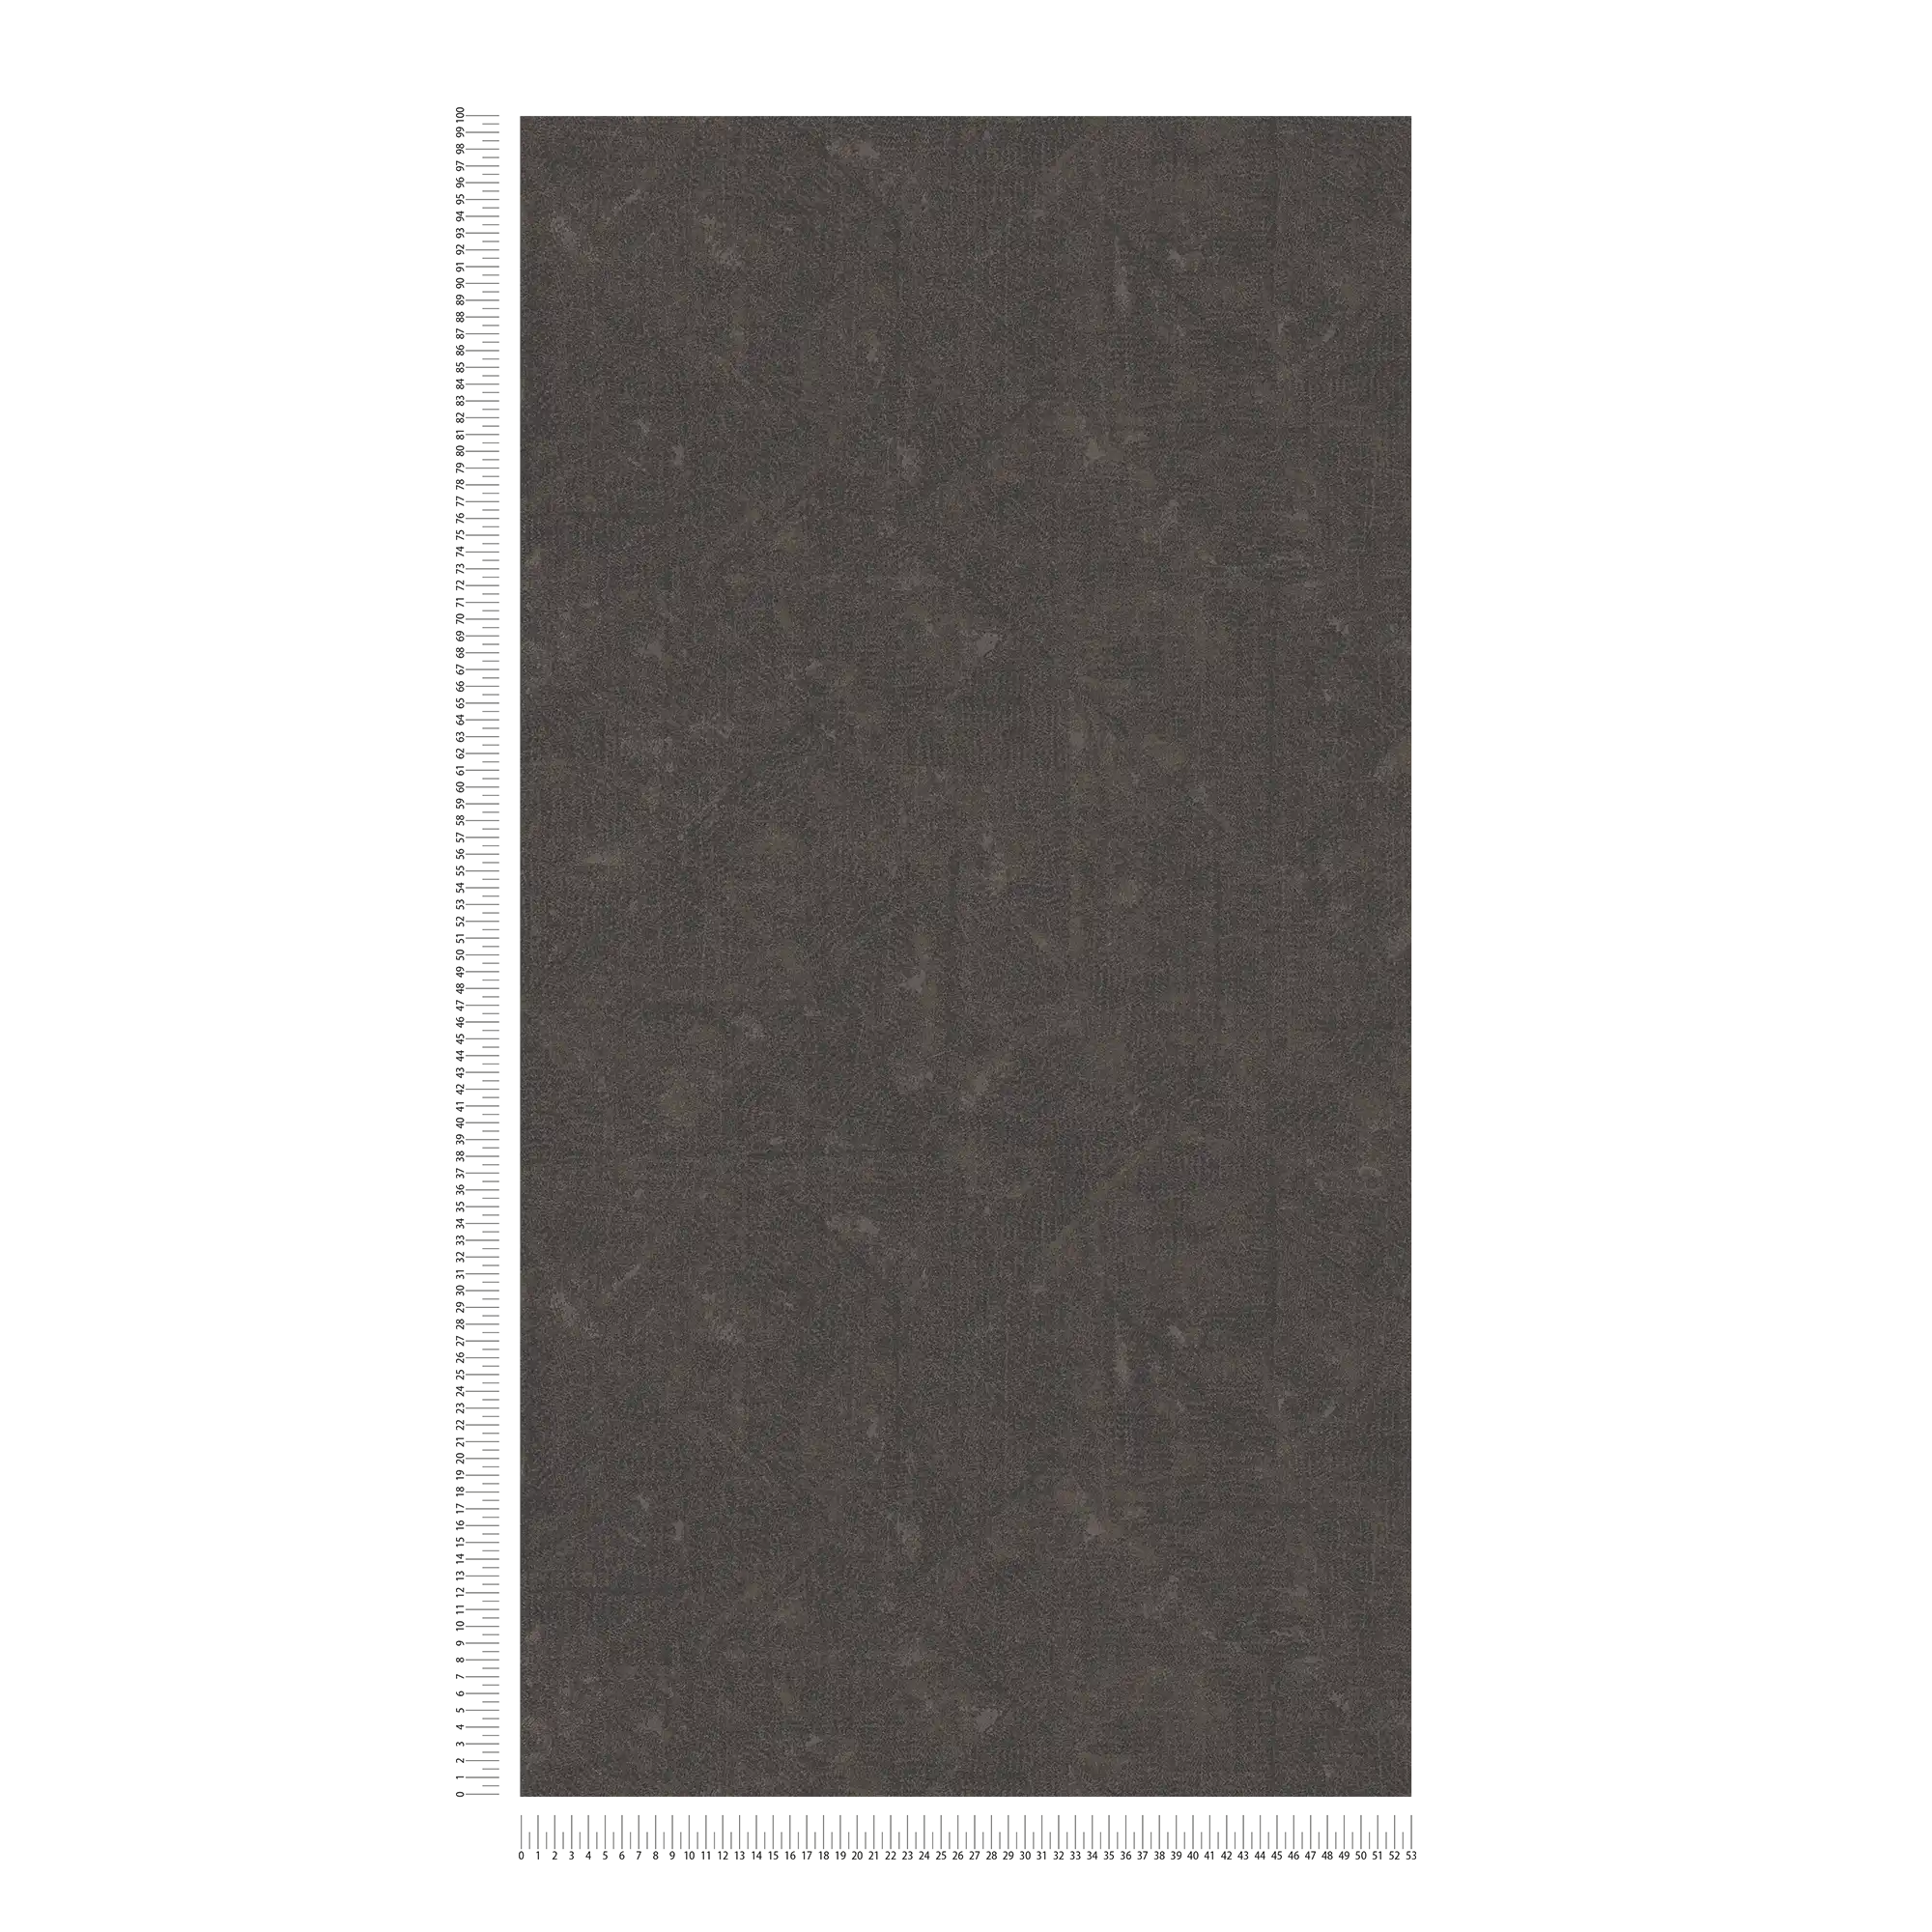             Dark brown non-woven wallpaper subtly patterned - brown, black, bronze
        